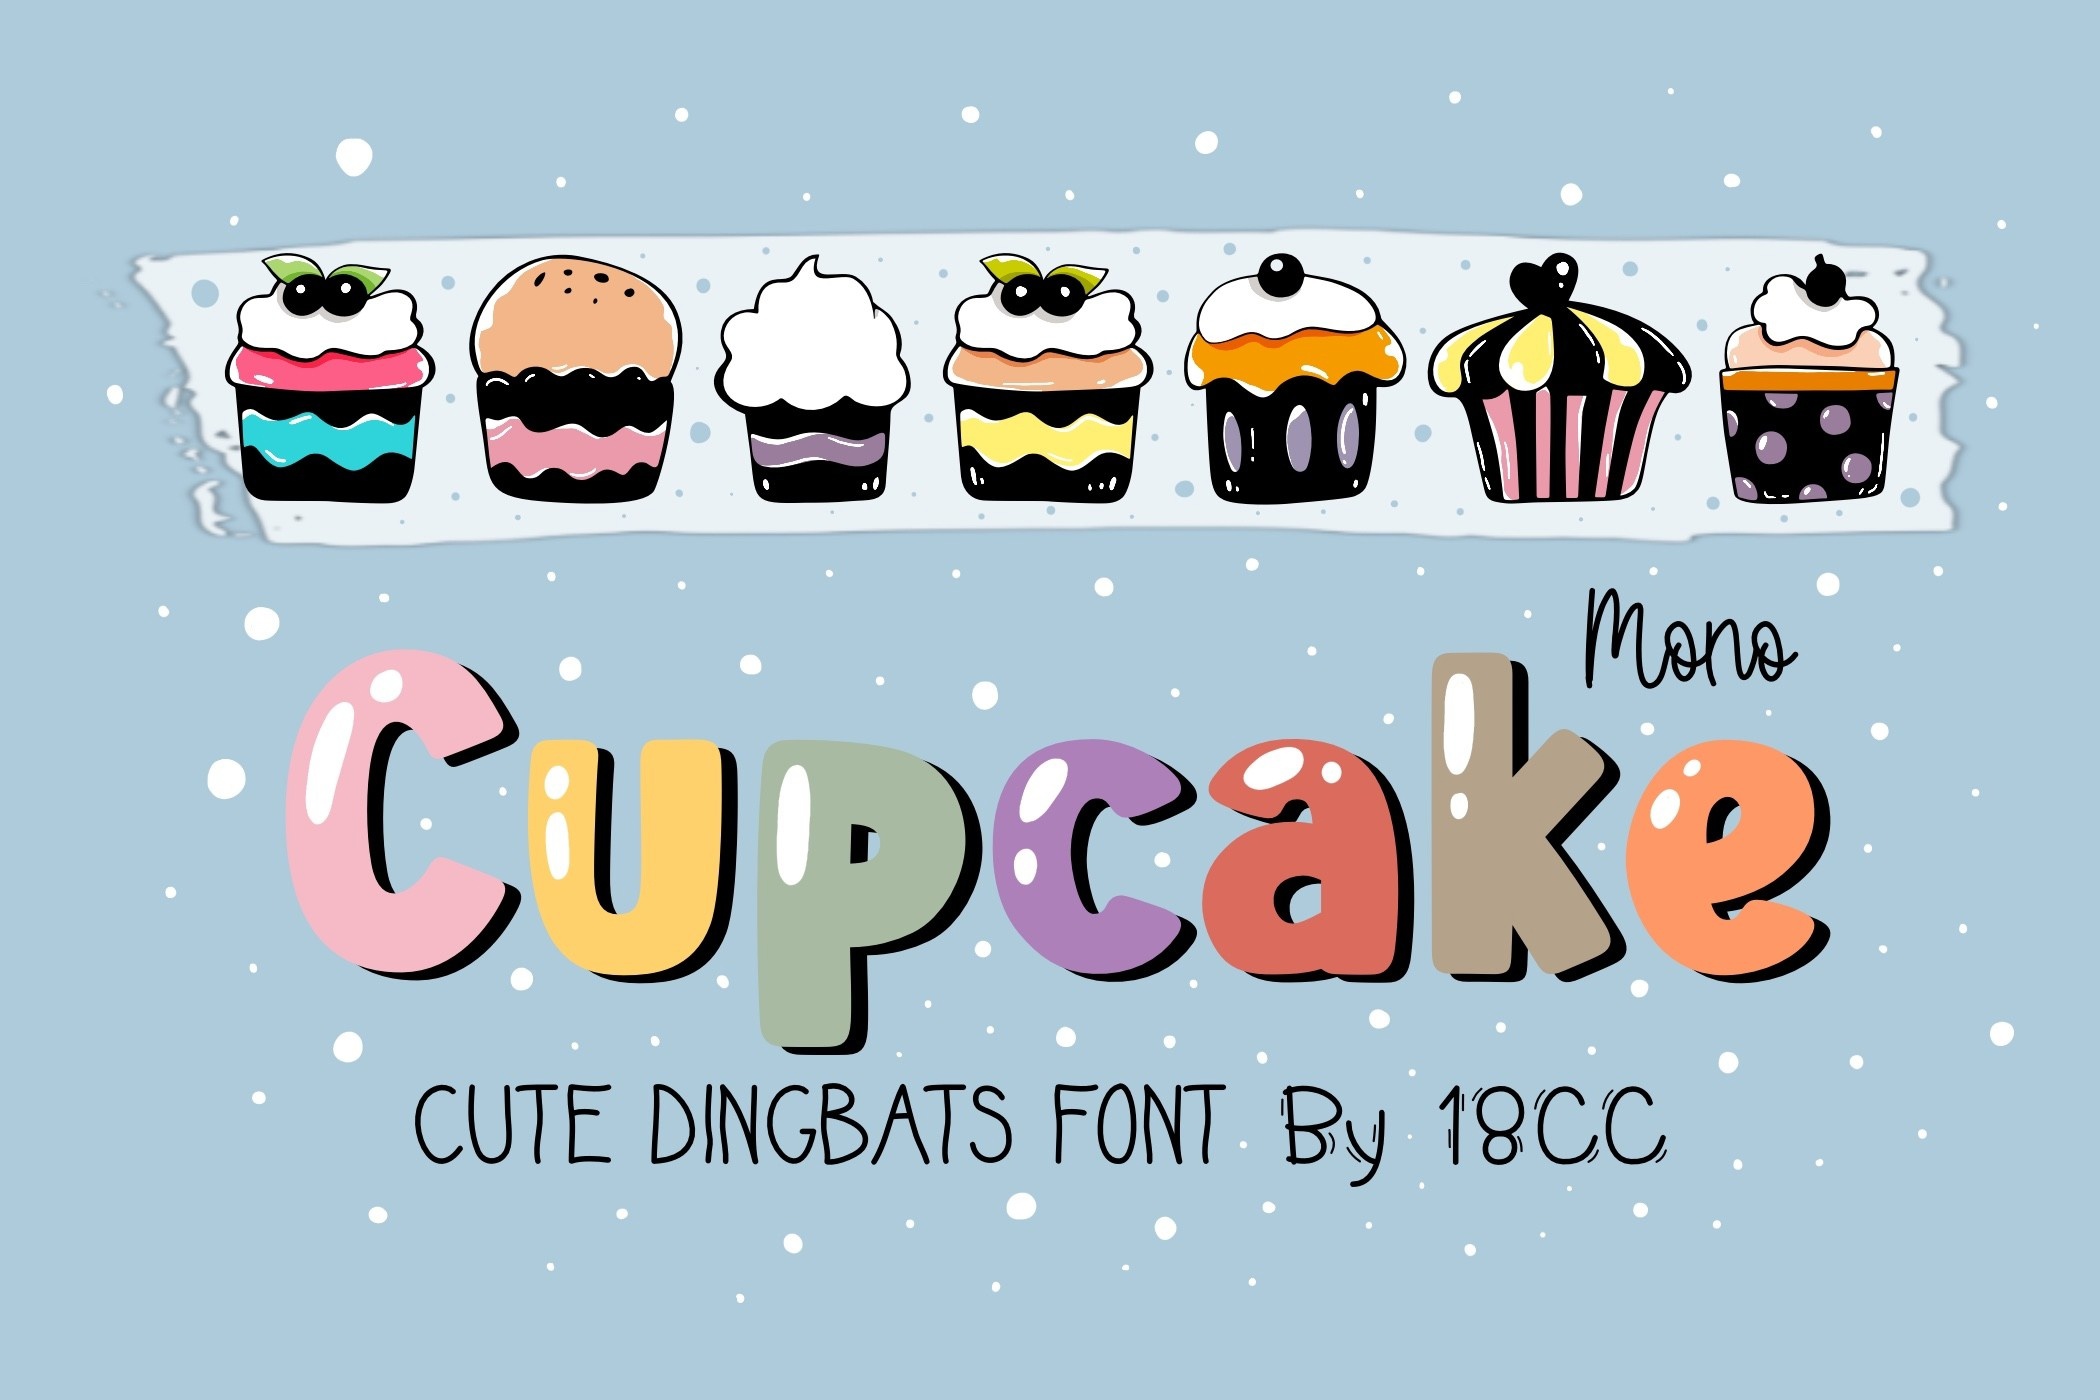 Mono Cupcake Font